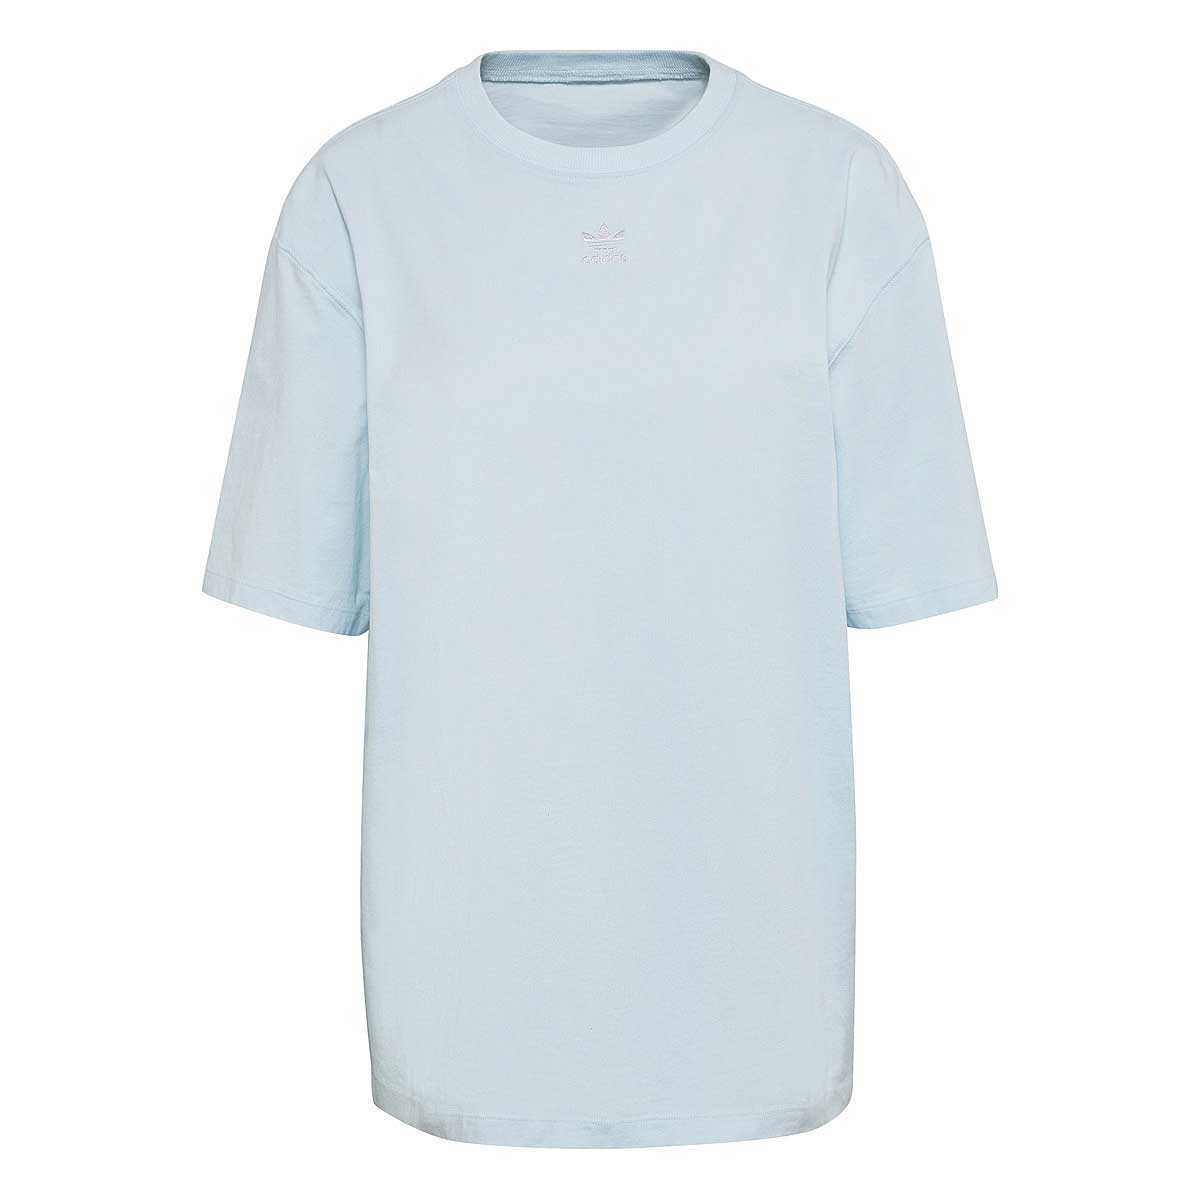 Adidas Originals T-Shirt, Almblu